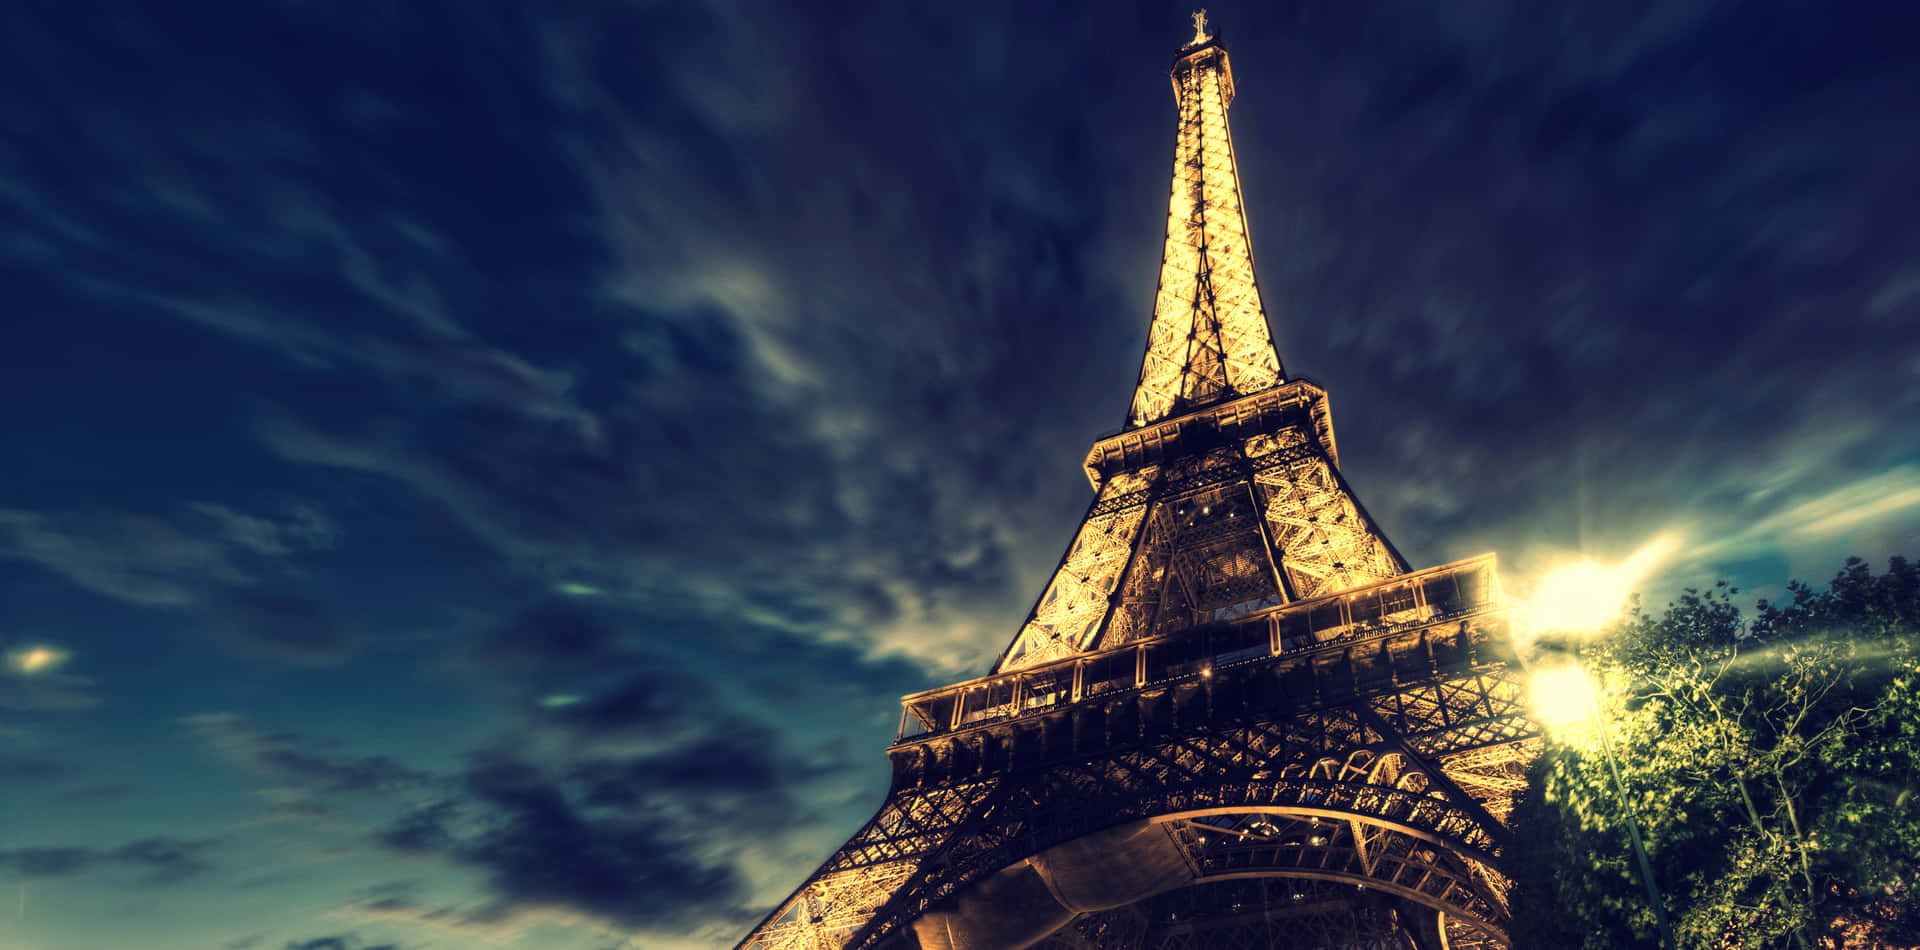 Bildder Nächtlichen Szenerie Des Eiffelturms